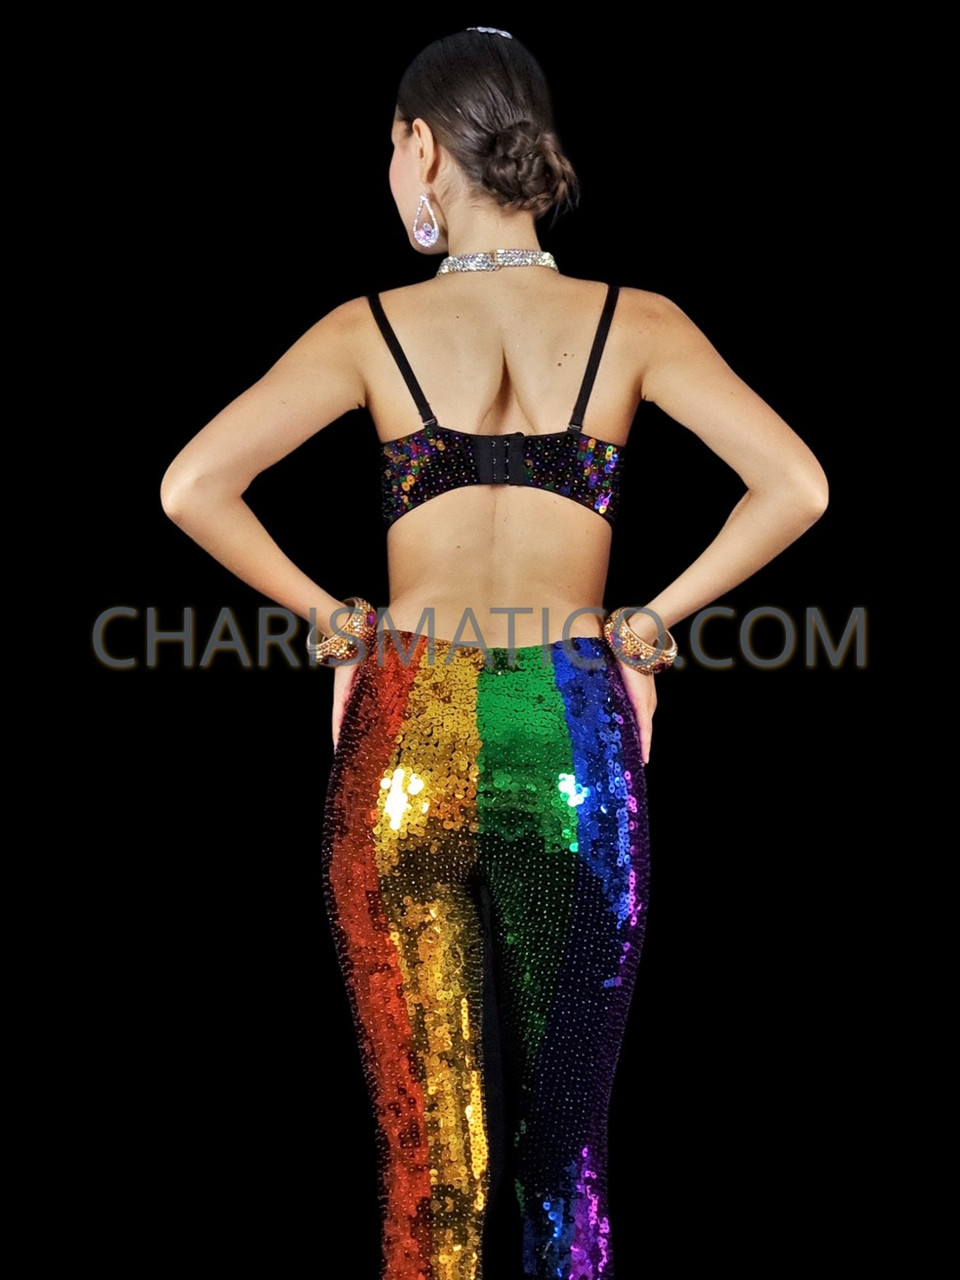 Mirrored Crystallized Rainbow Pride Sequin Bra Top